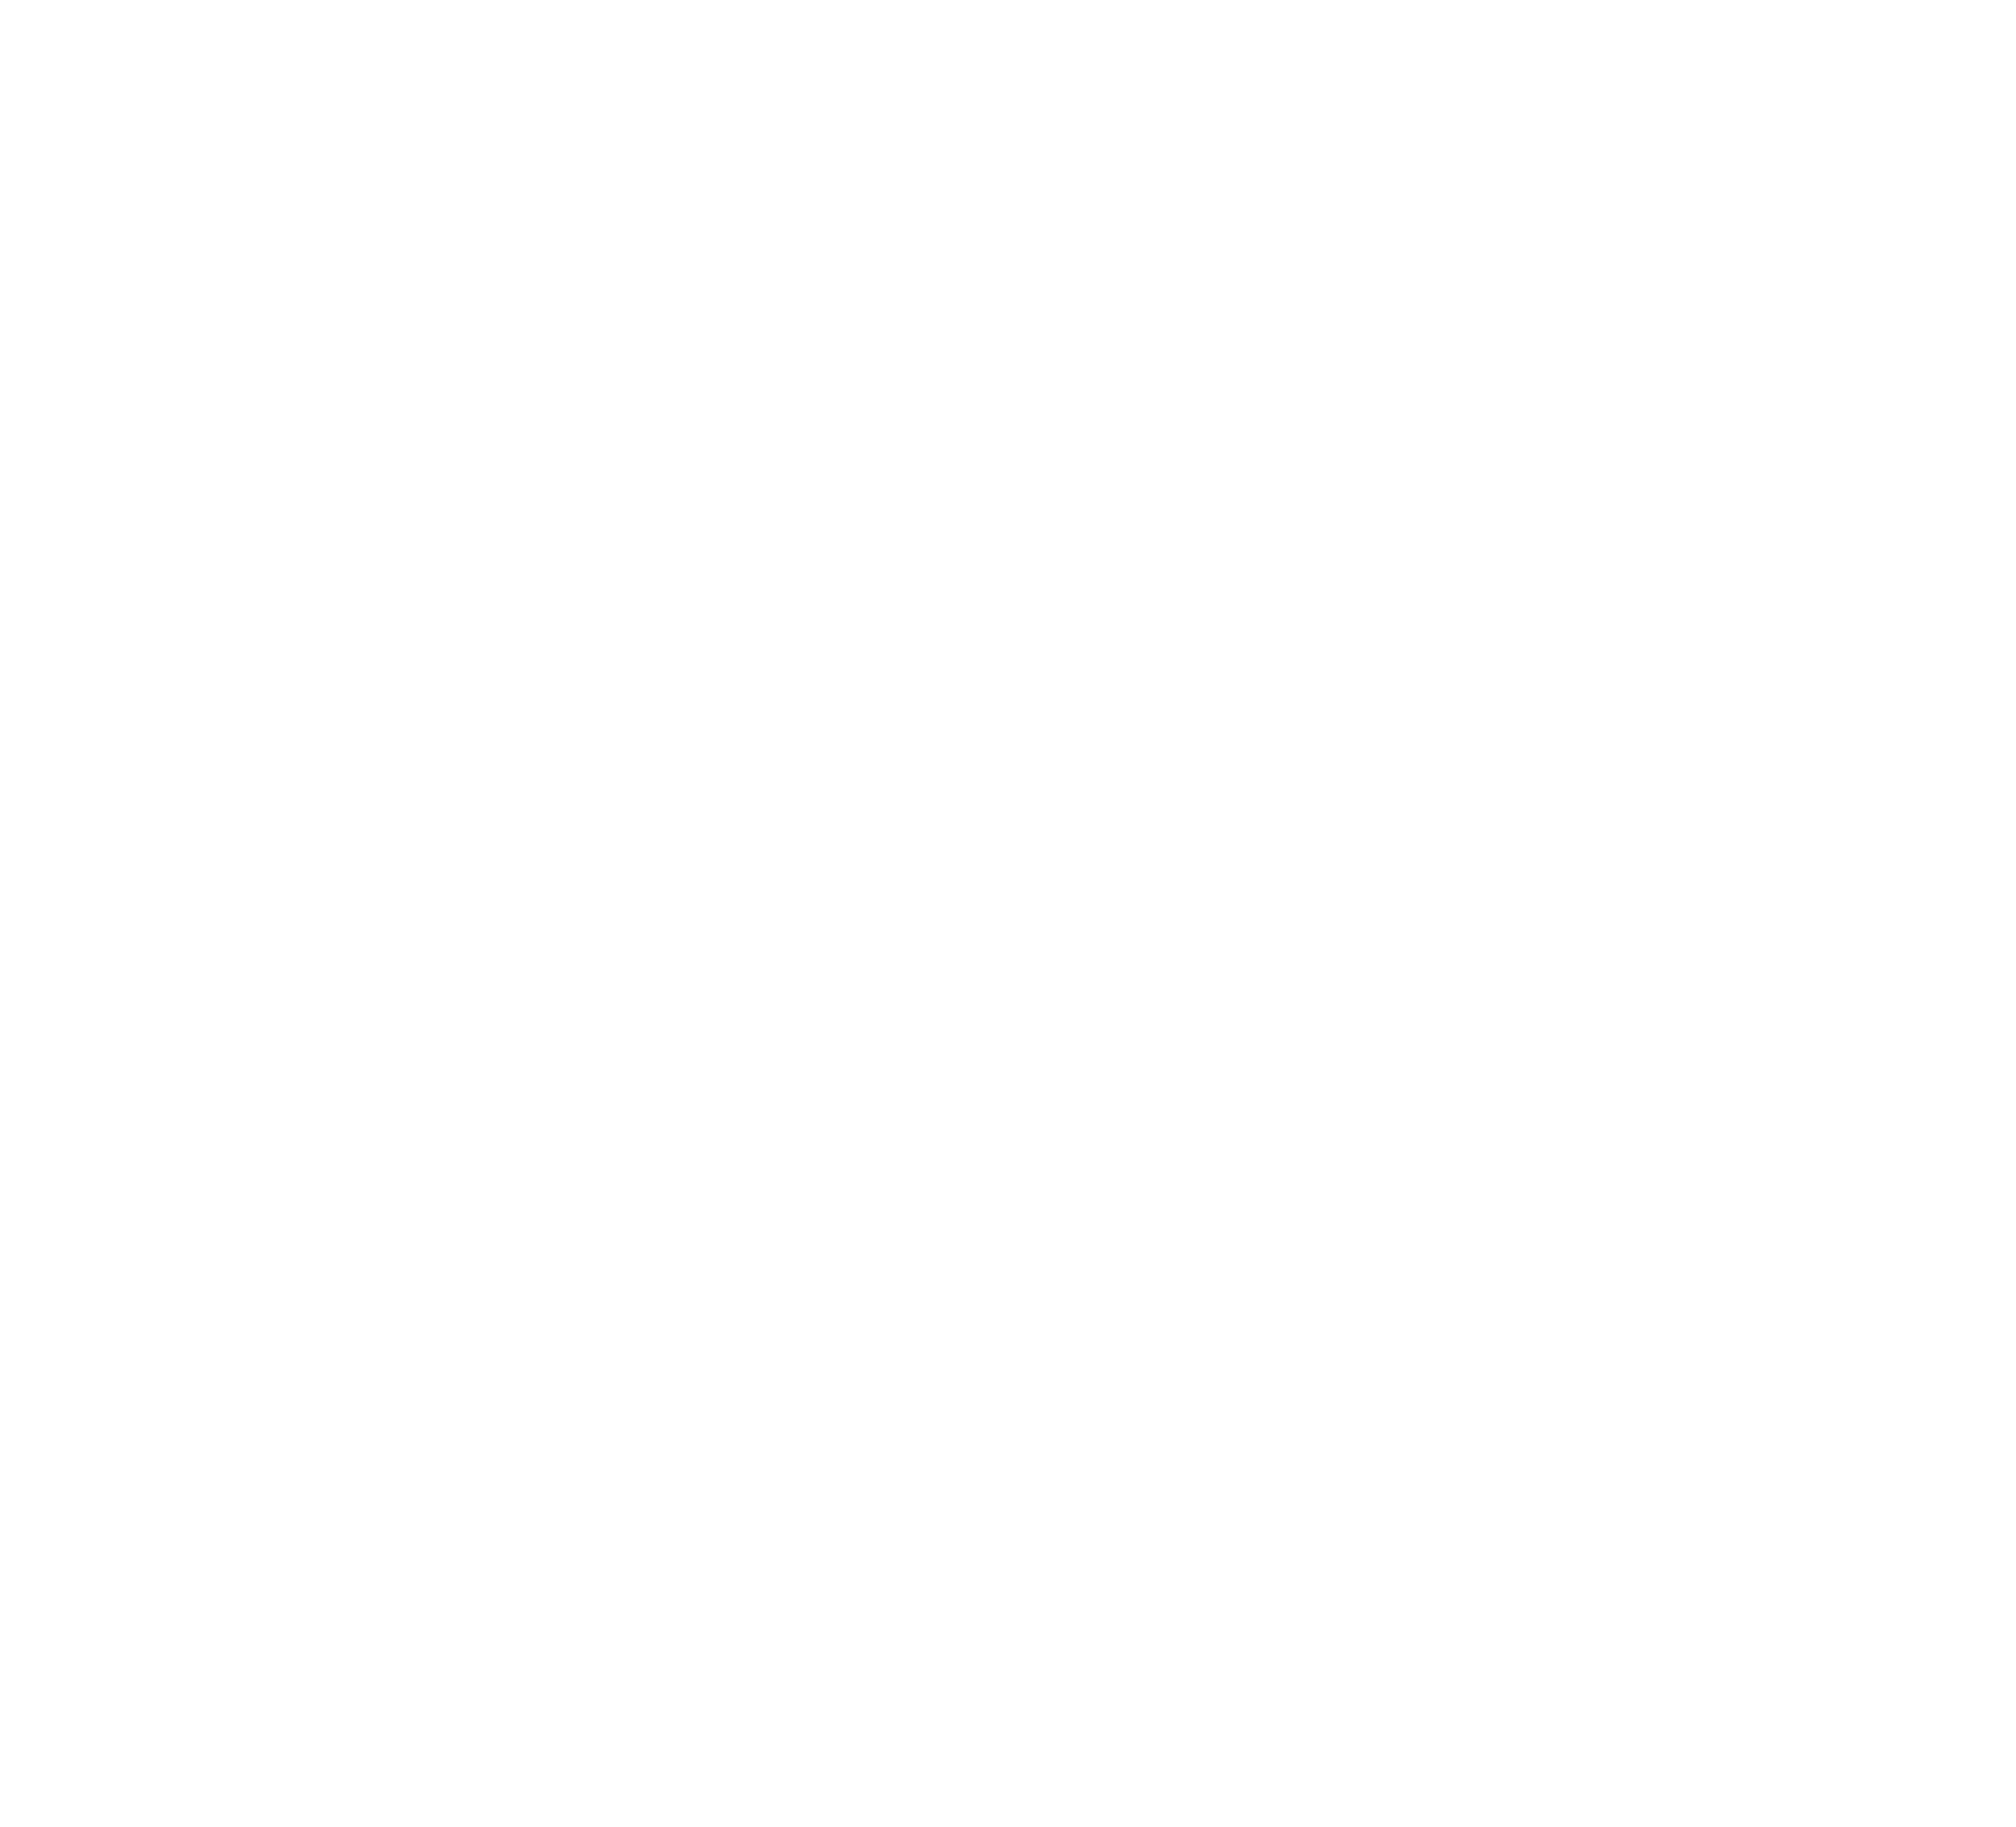 SJ McDonald